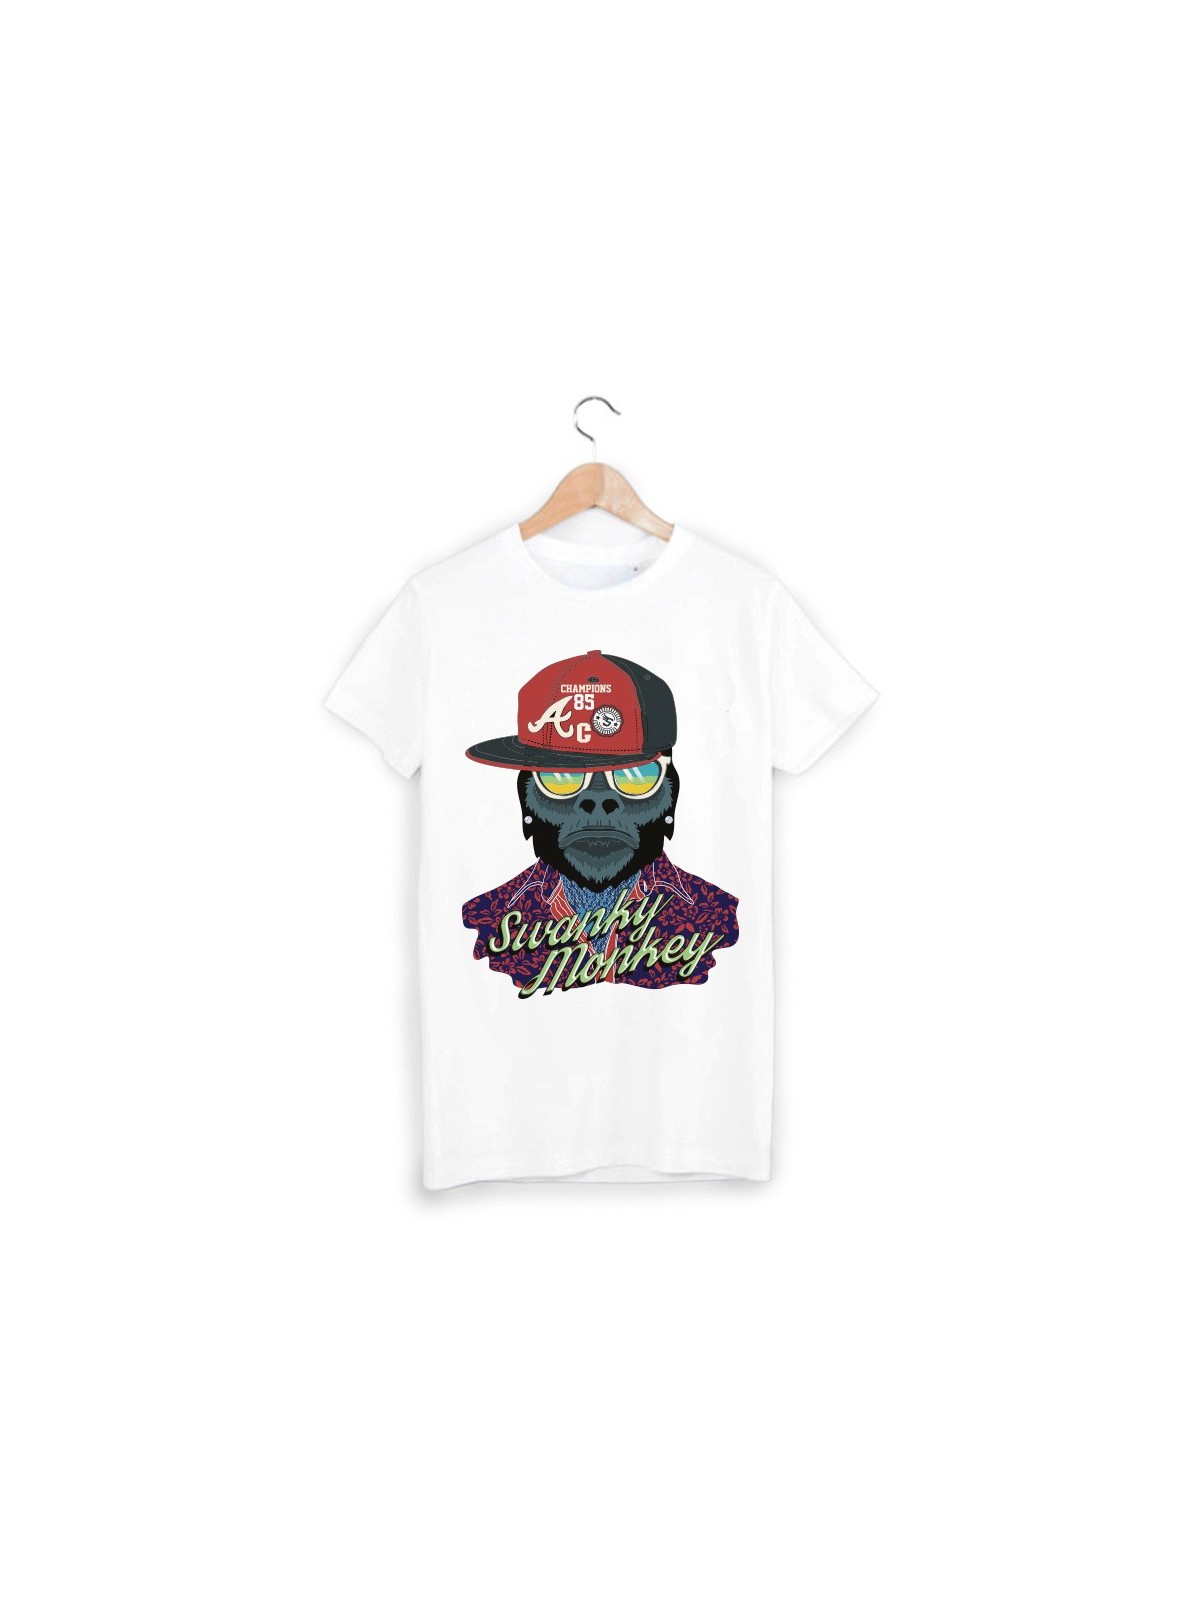 T-Shirt monkey hip hop ref 930